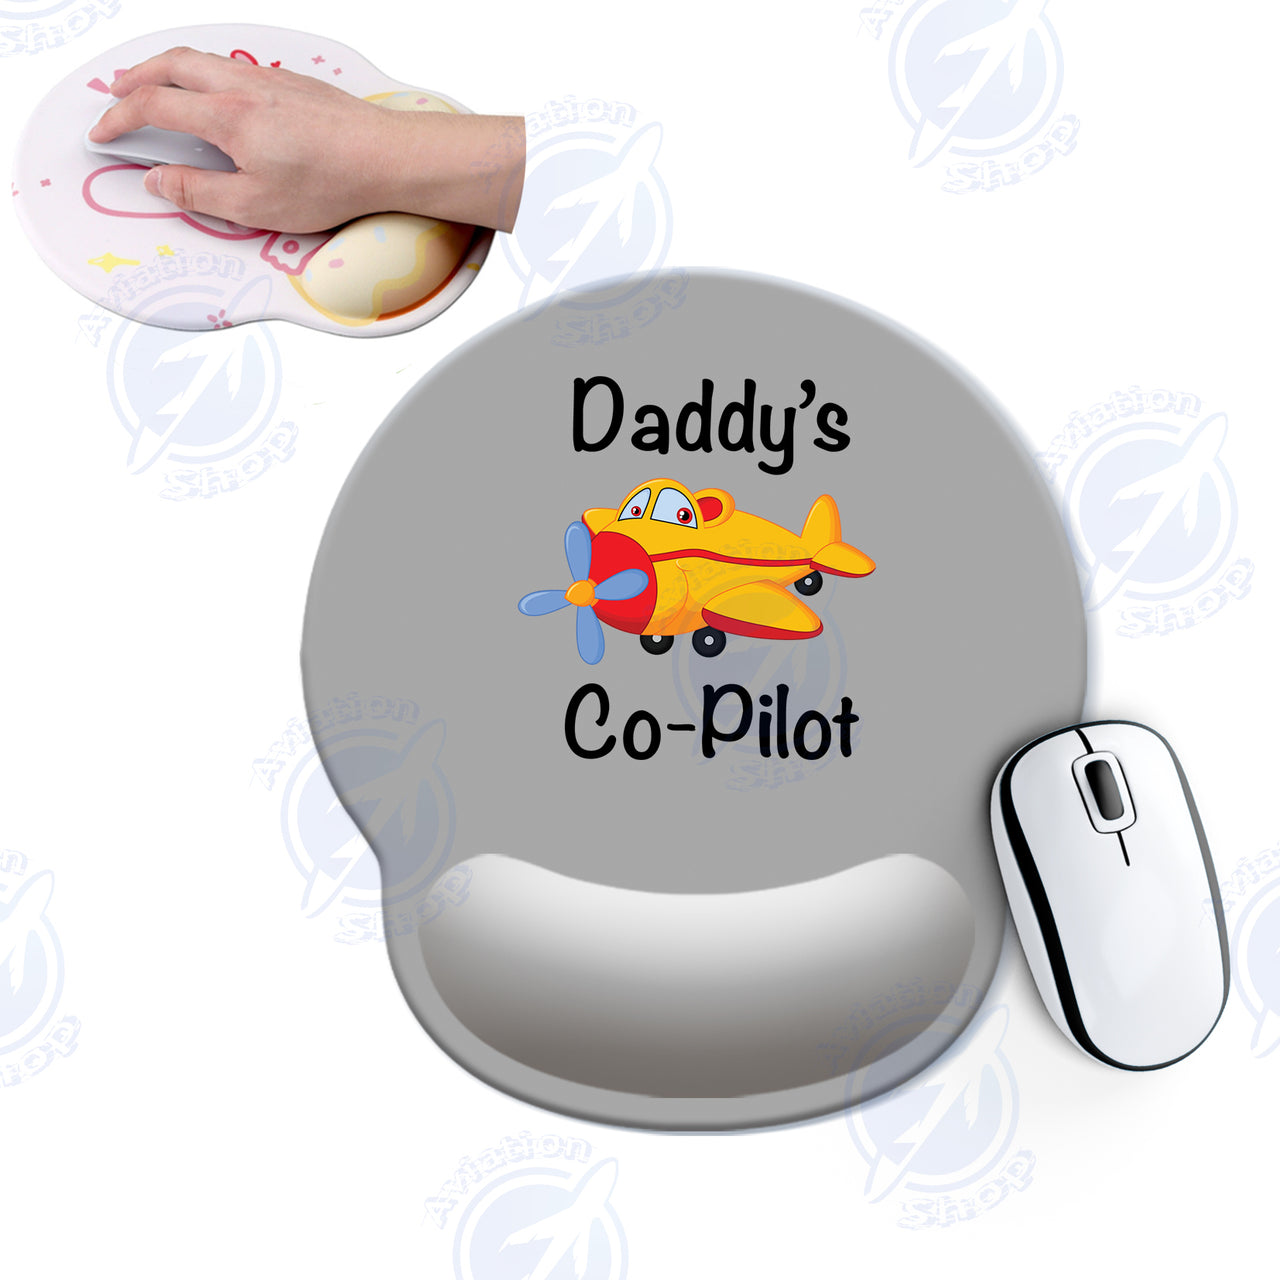 Daddy's CoPilot (Propeller) Designed Ergonomic Mouse Pads